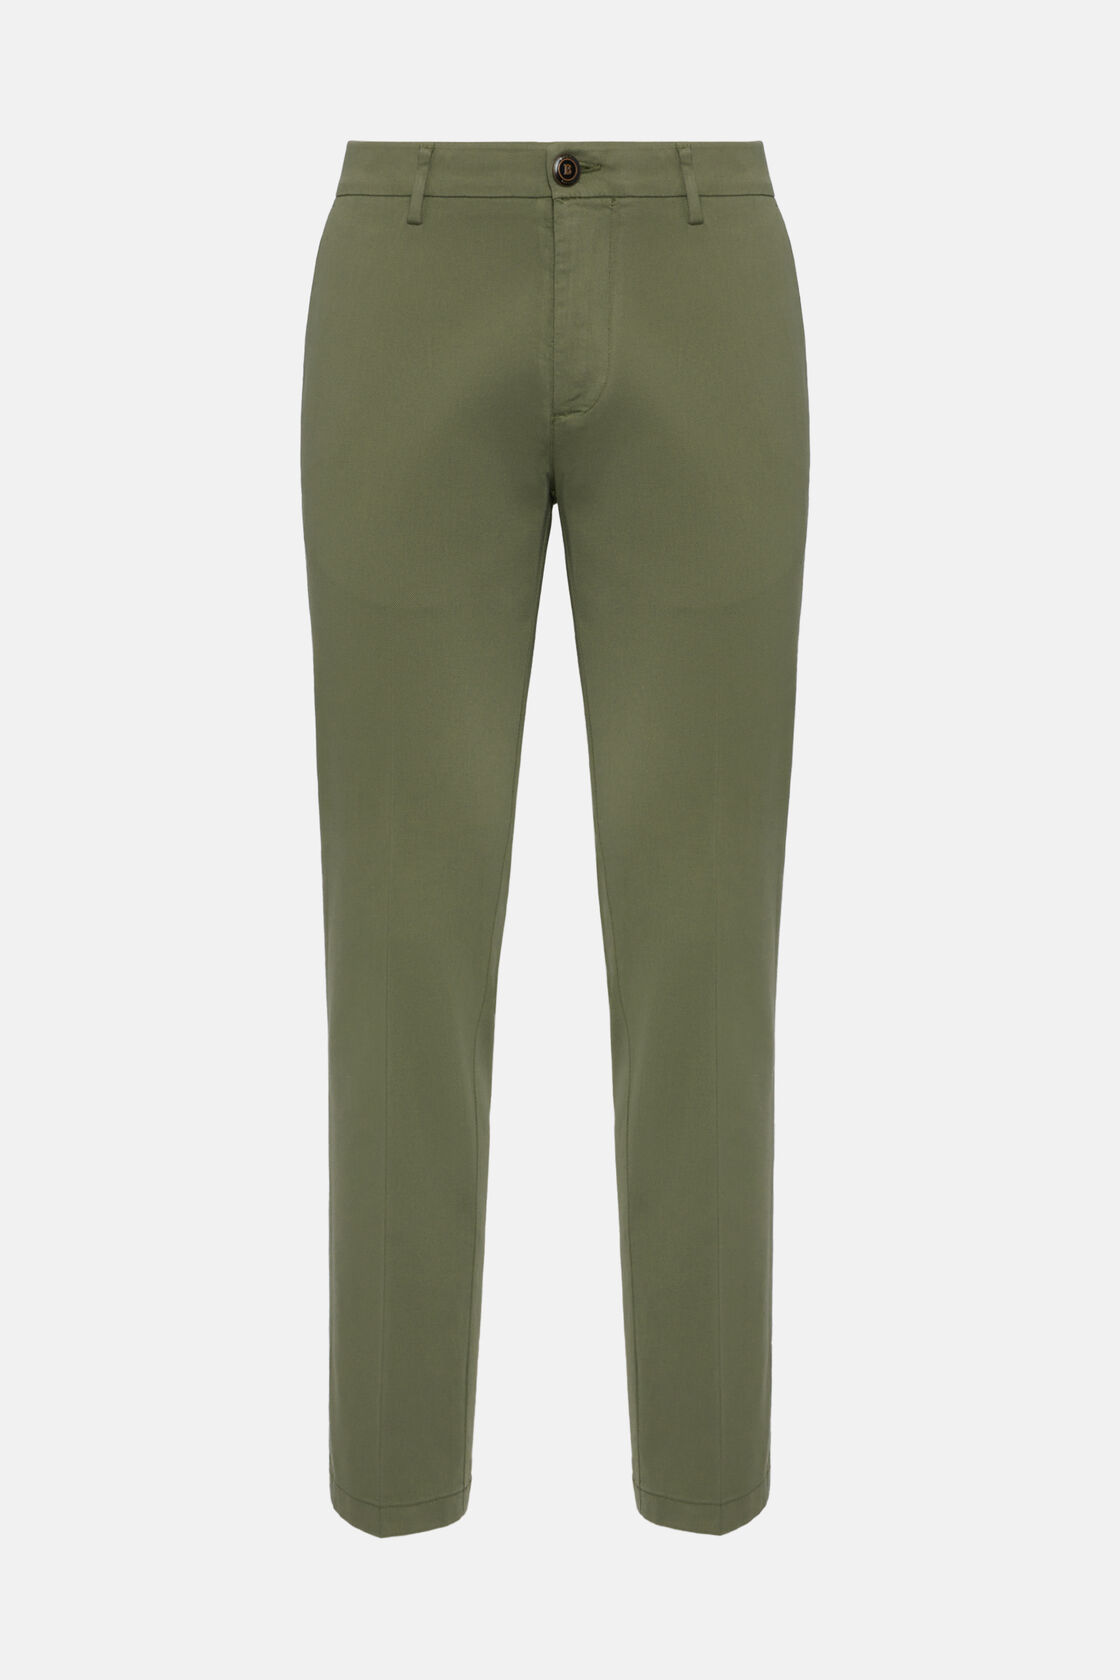 Stretch Cotton/Tencel Pants, Military Green, hi-res